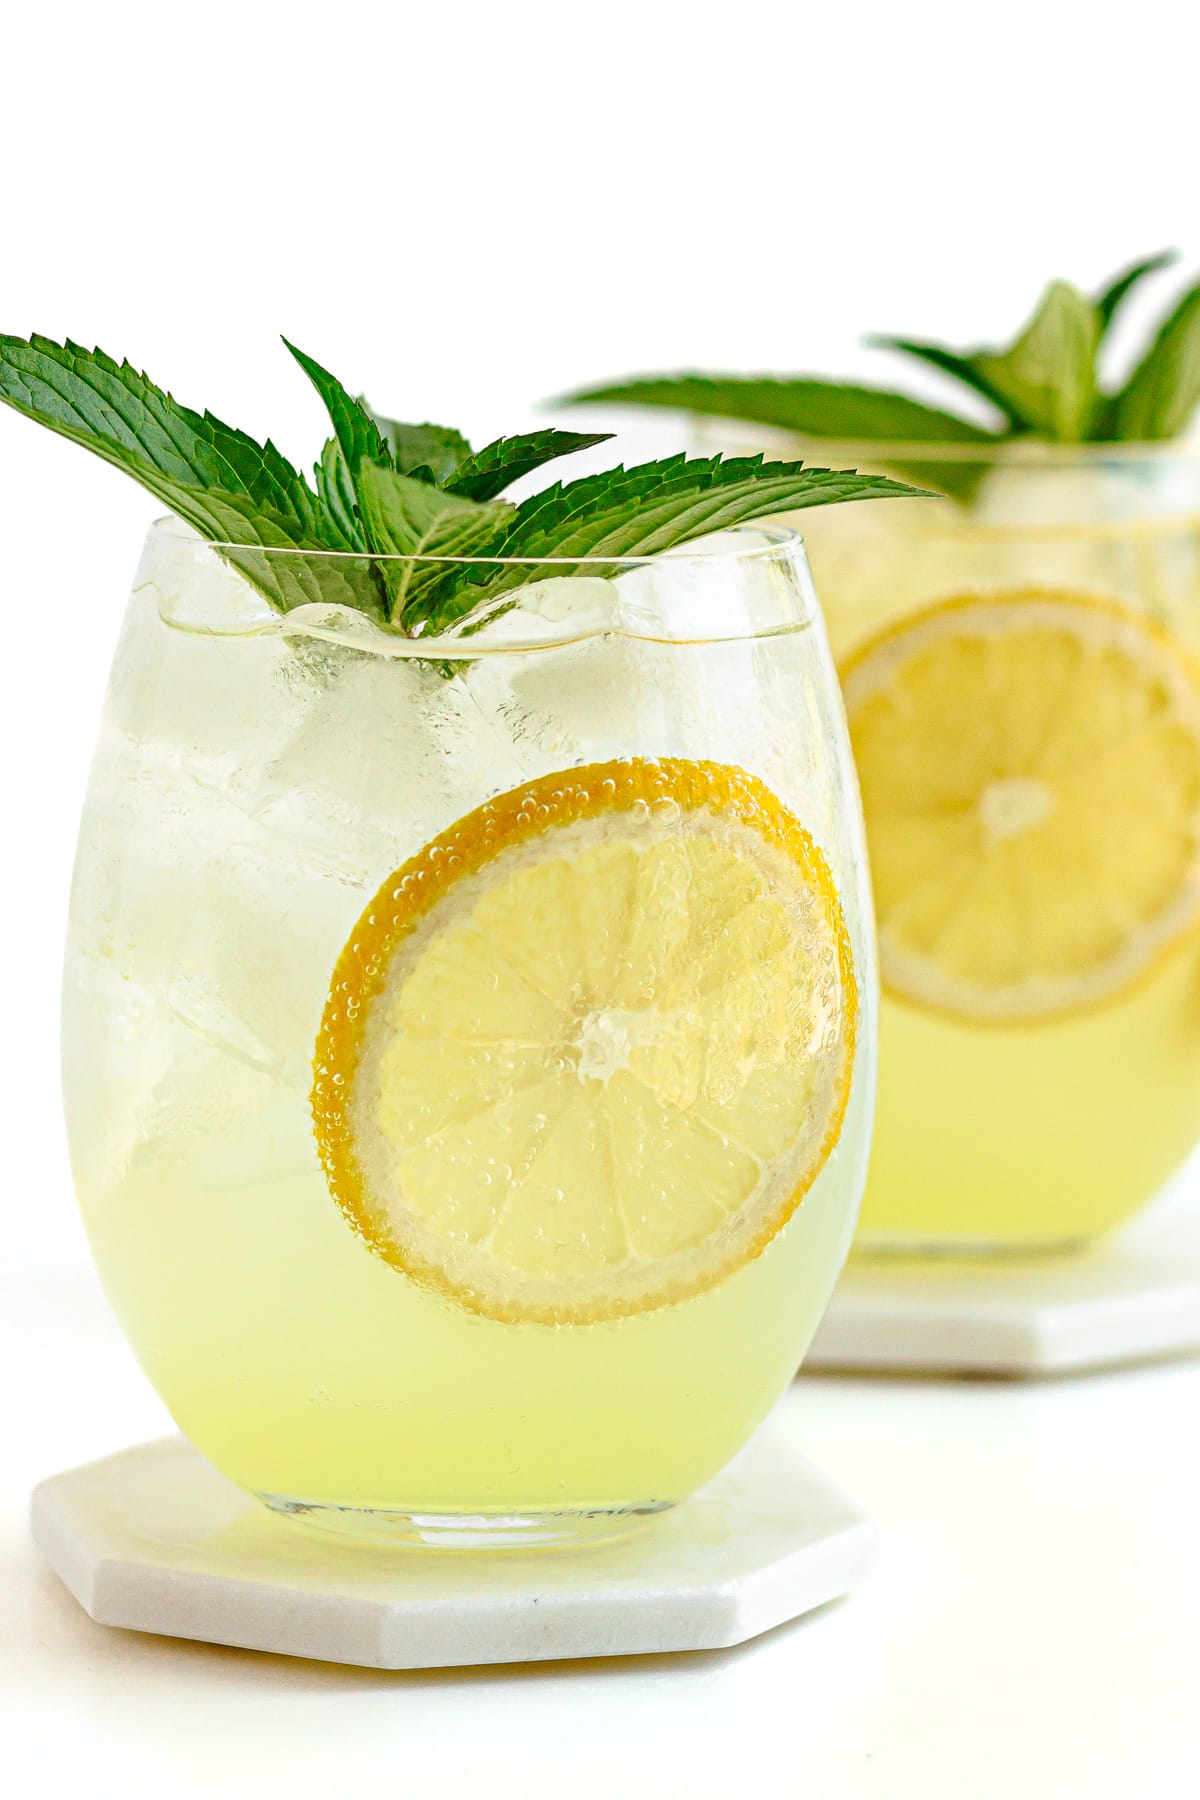 Two glasses of limoncello spritz cocktail.